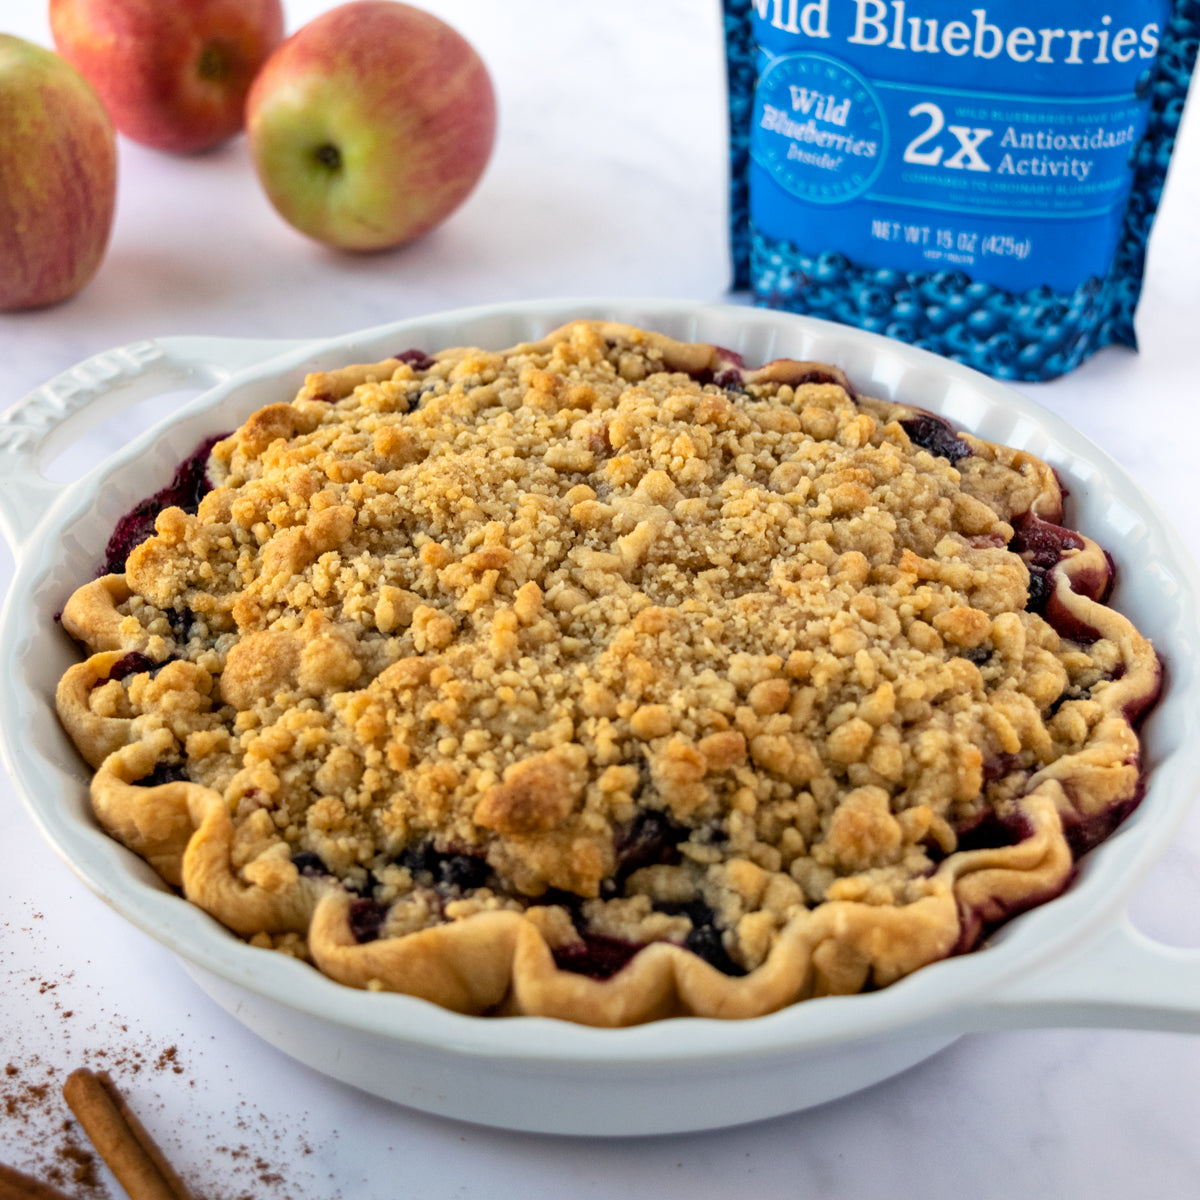 Wild Blueberry and Apple Crumb Pie